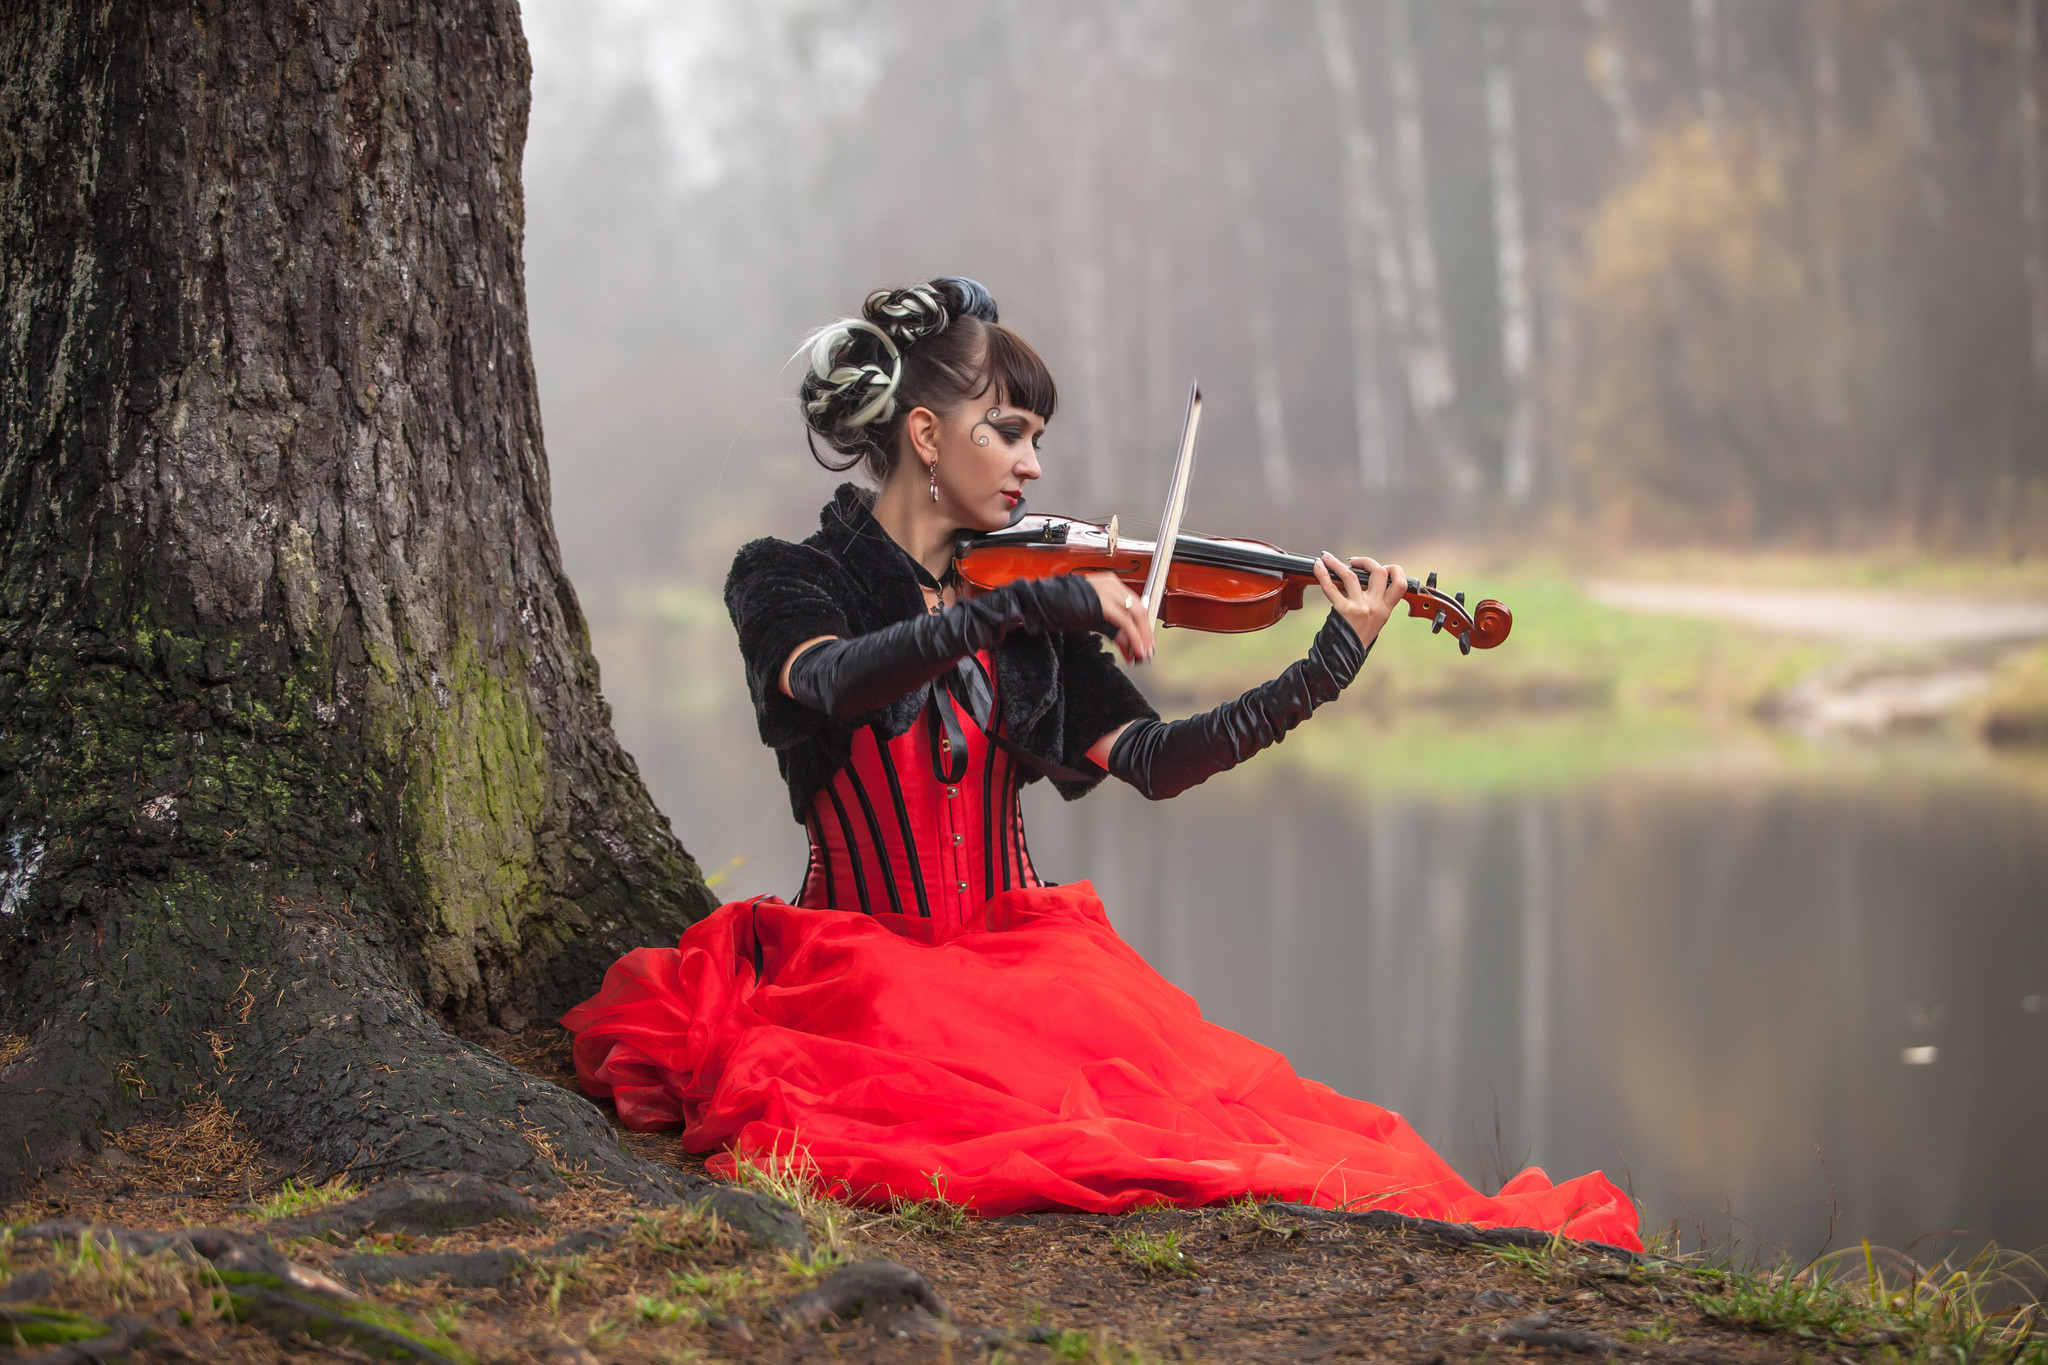 Скрипка боль. Девушки со скрипкой. Женщина со скрипкой. Фотосессия со скрипкой. Девушка со скрипкой на природе.